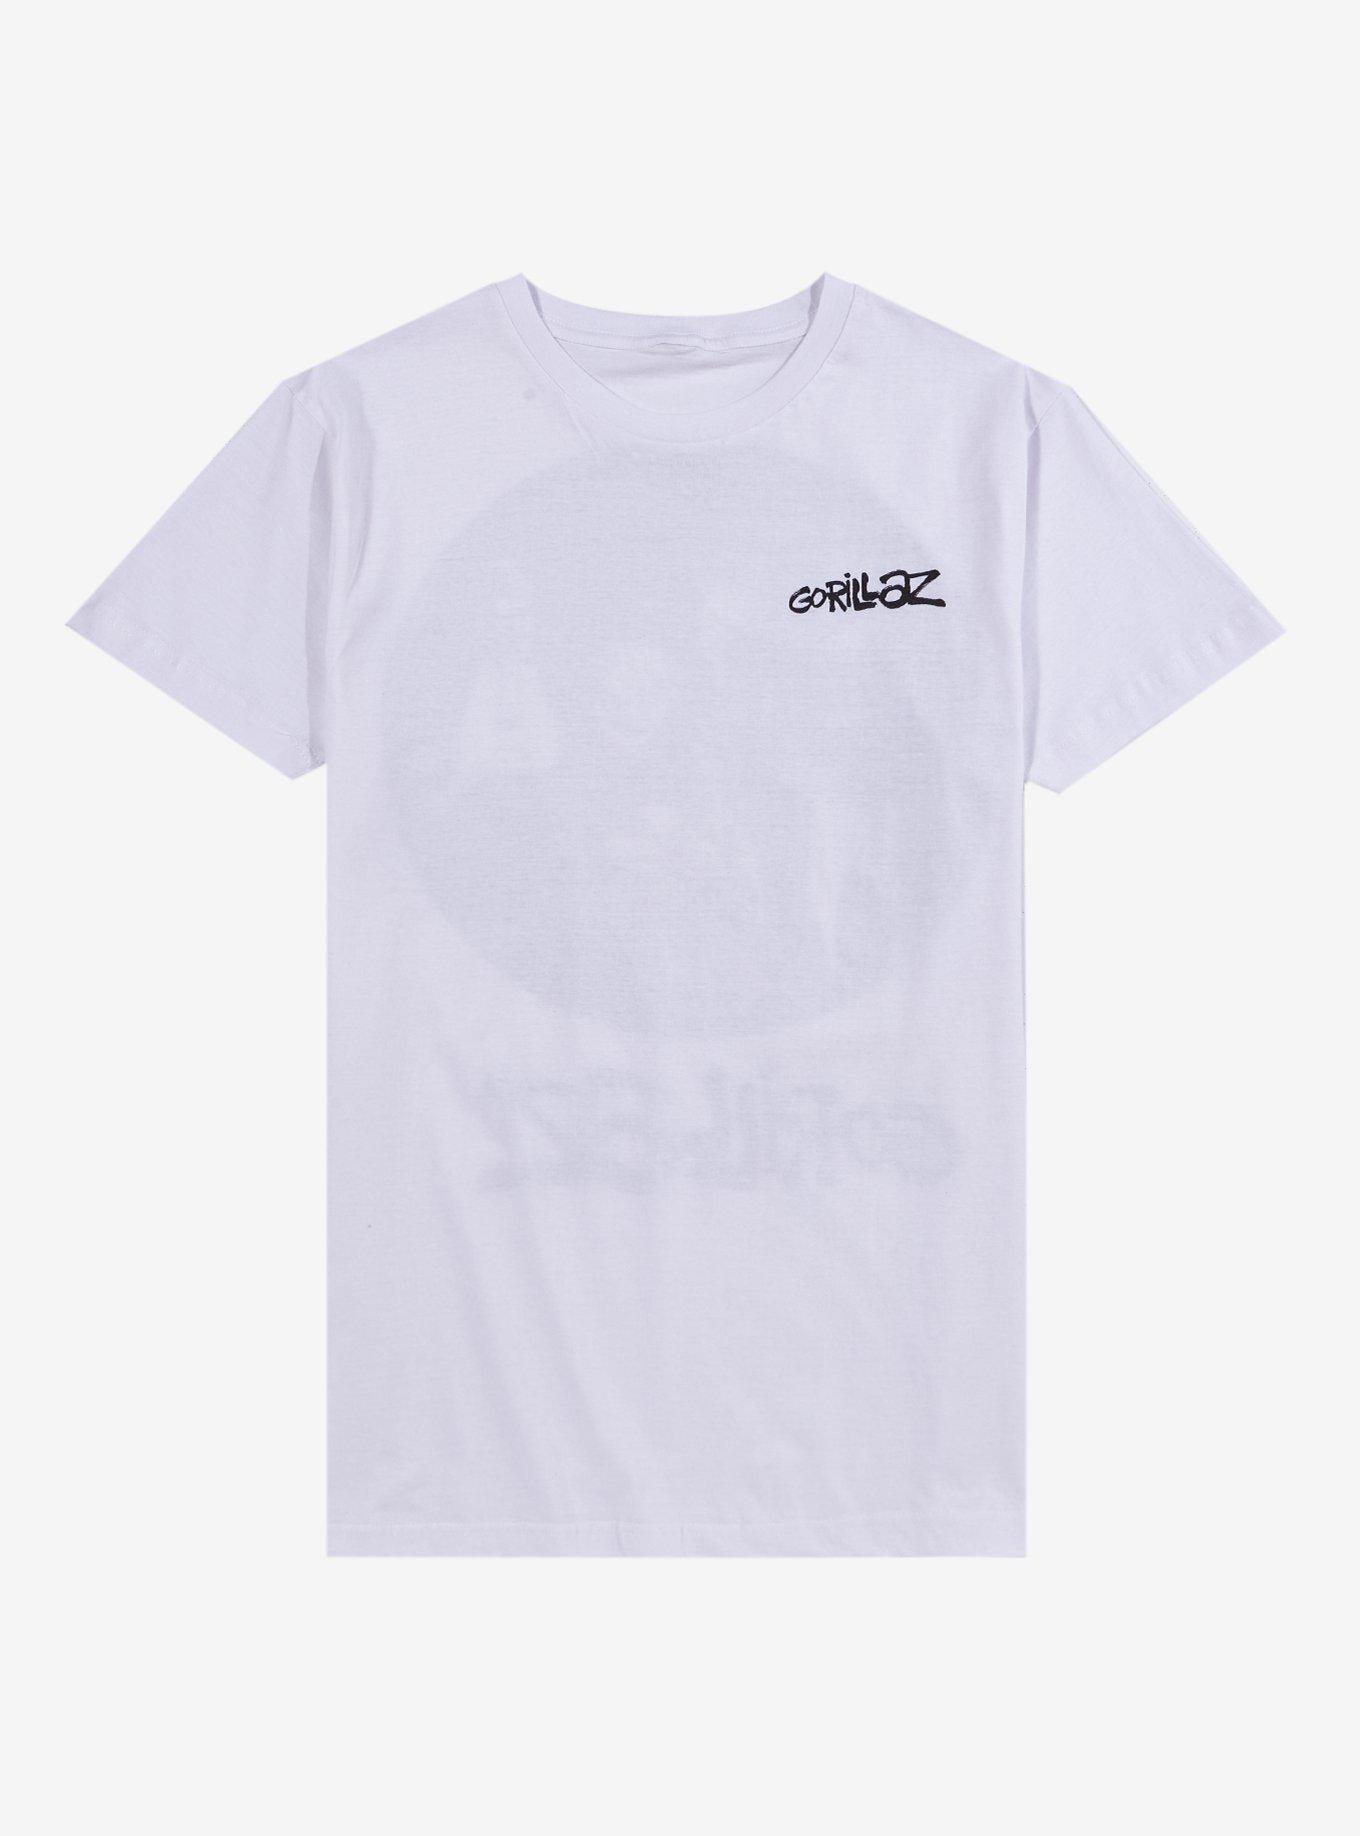 Gorillaz Song Machine Group Boyfriend Fit Girls T-Shirt | Hot Topic